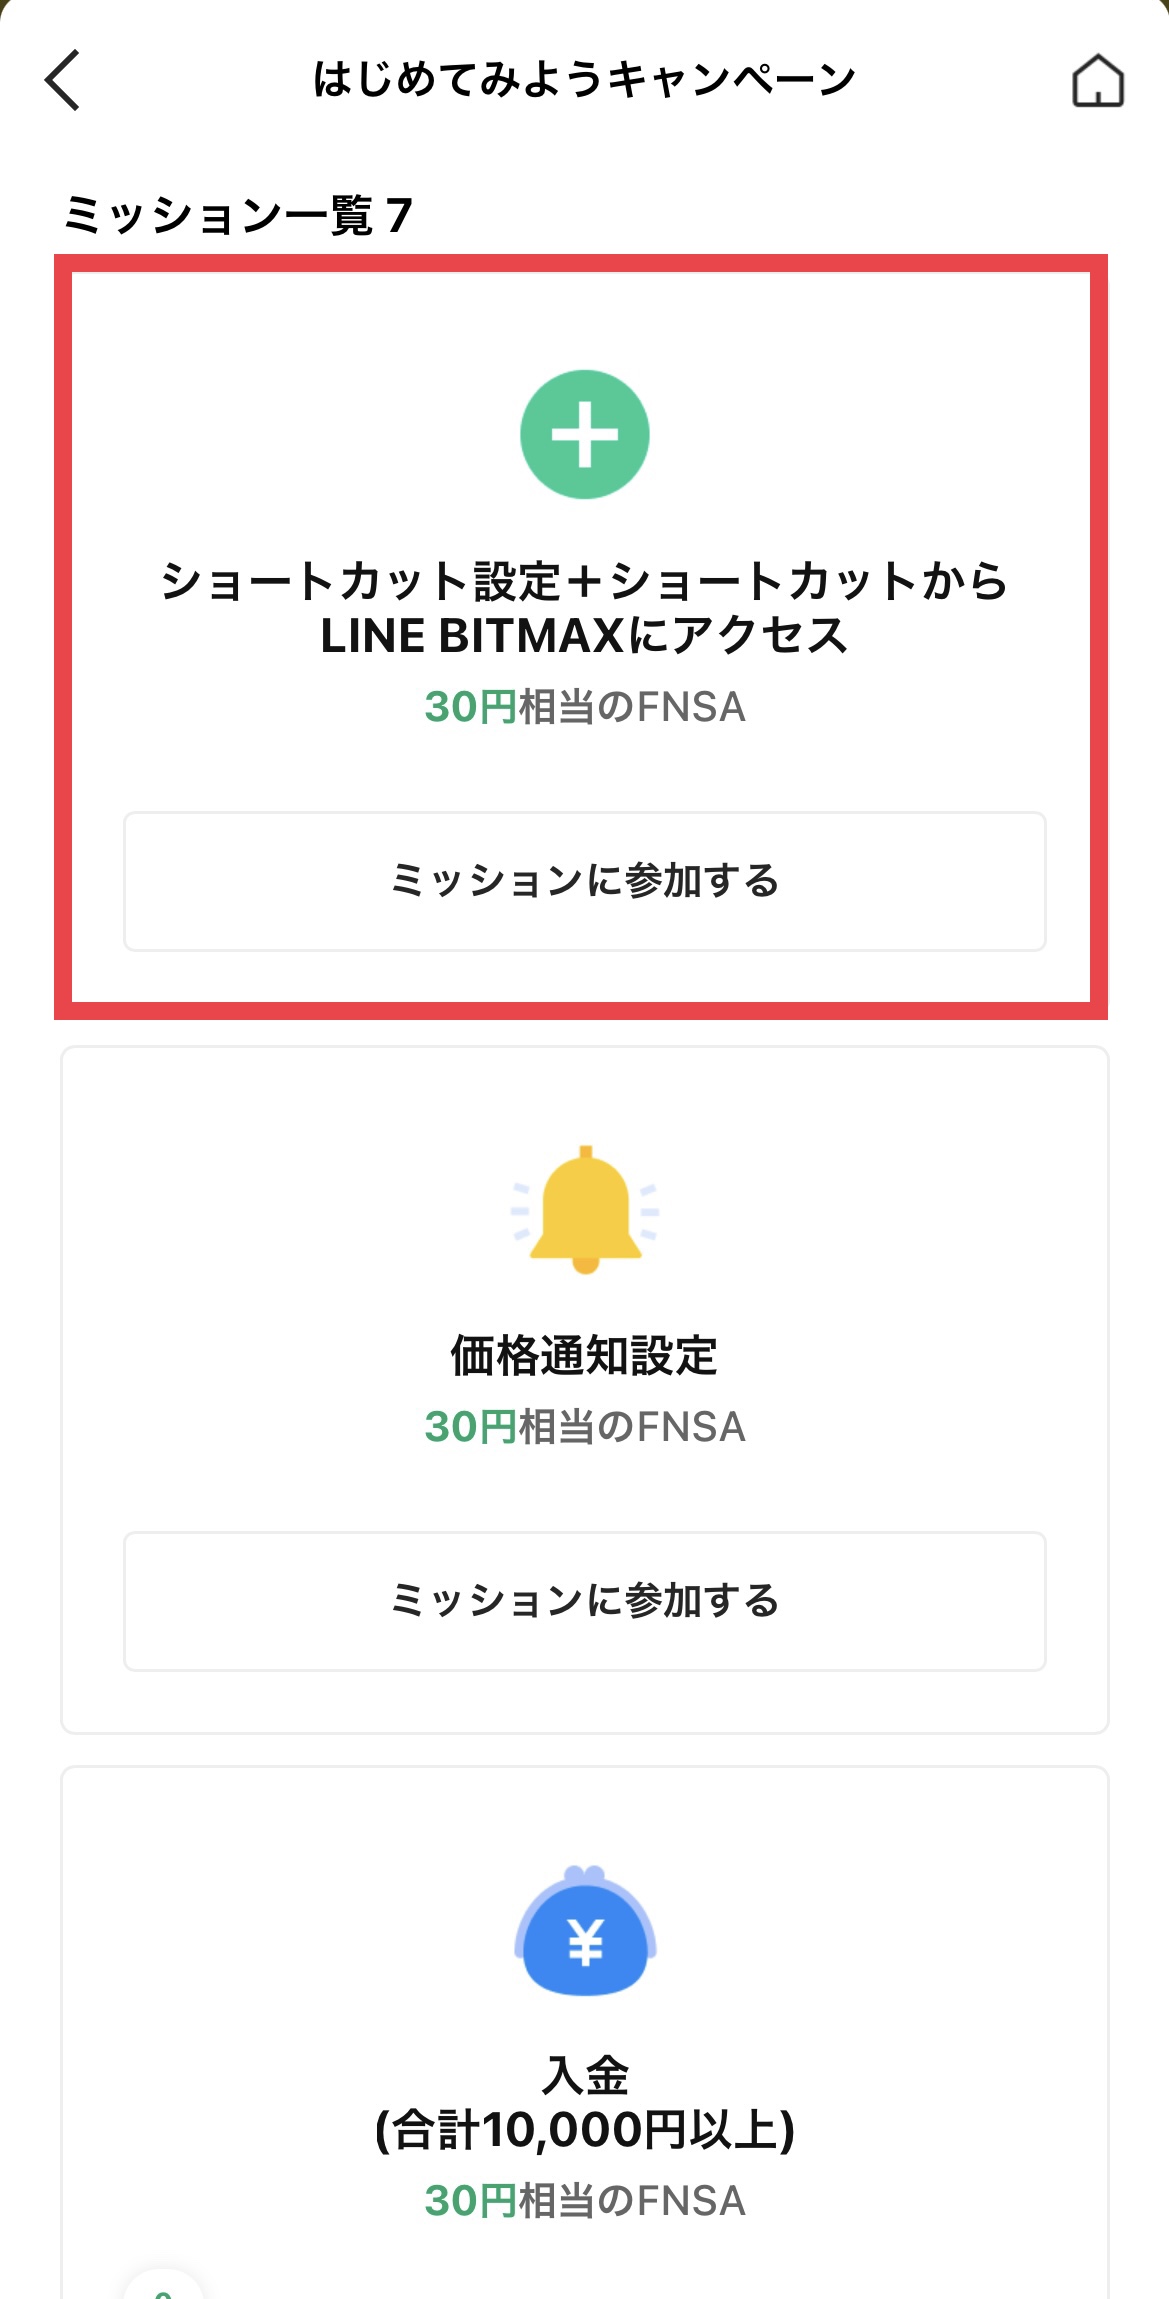 LINE BITMAXキャンペーン - ショートカット設定